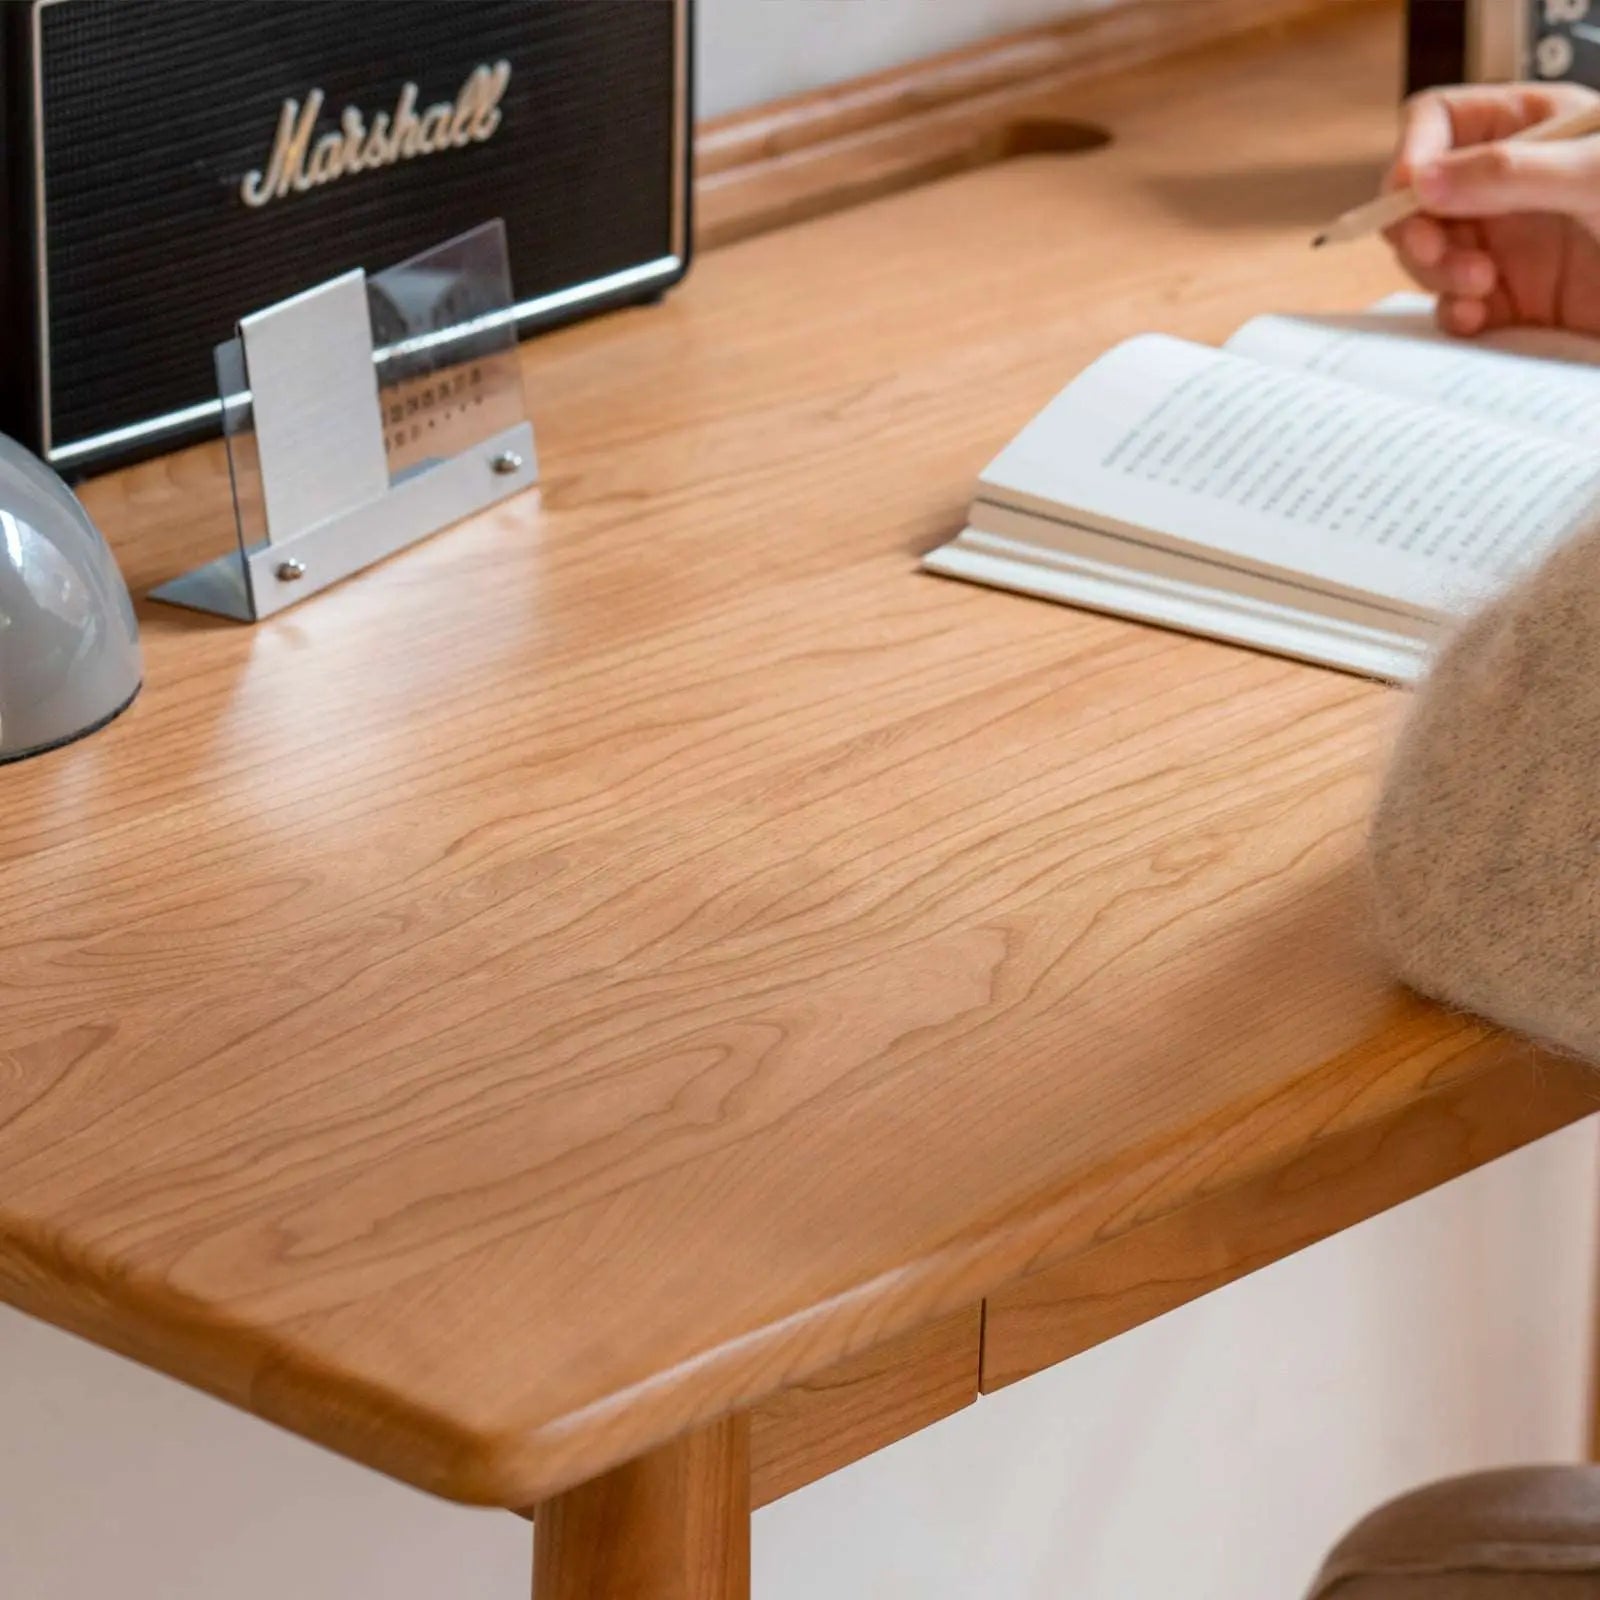 Bellemave 100% Solid Wood Desk w/Drawers, Pen Holder, Cable Hole